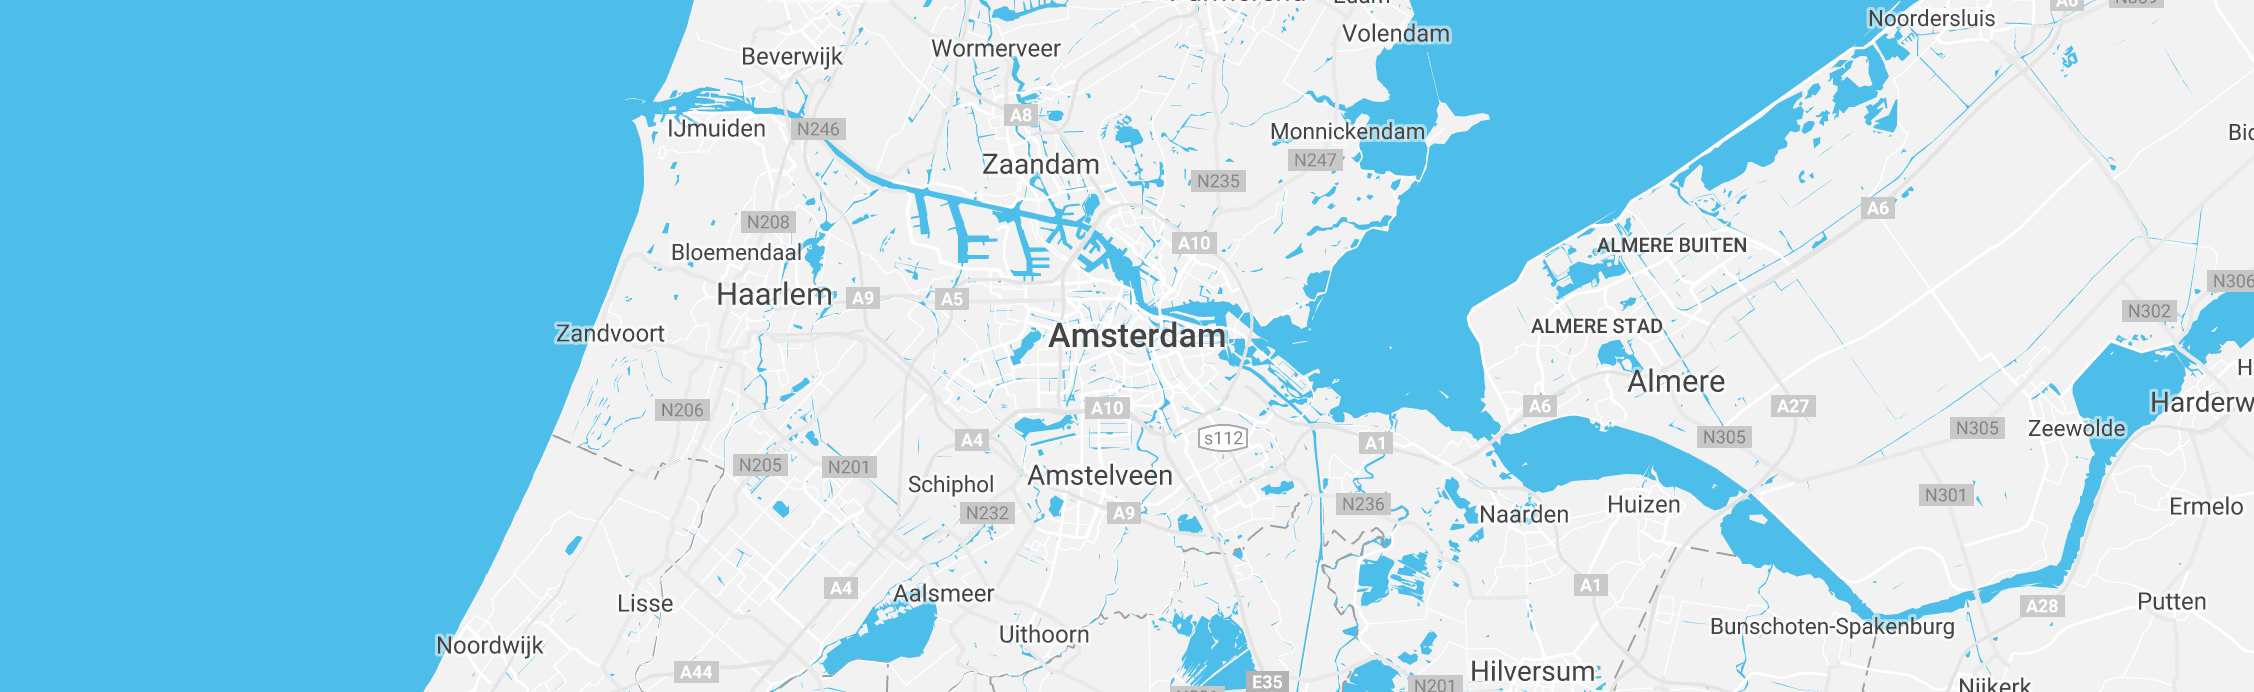 Amsterdam on Google Maps